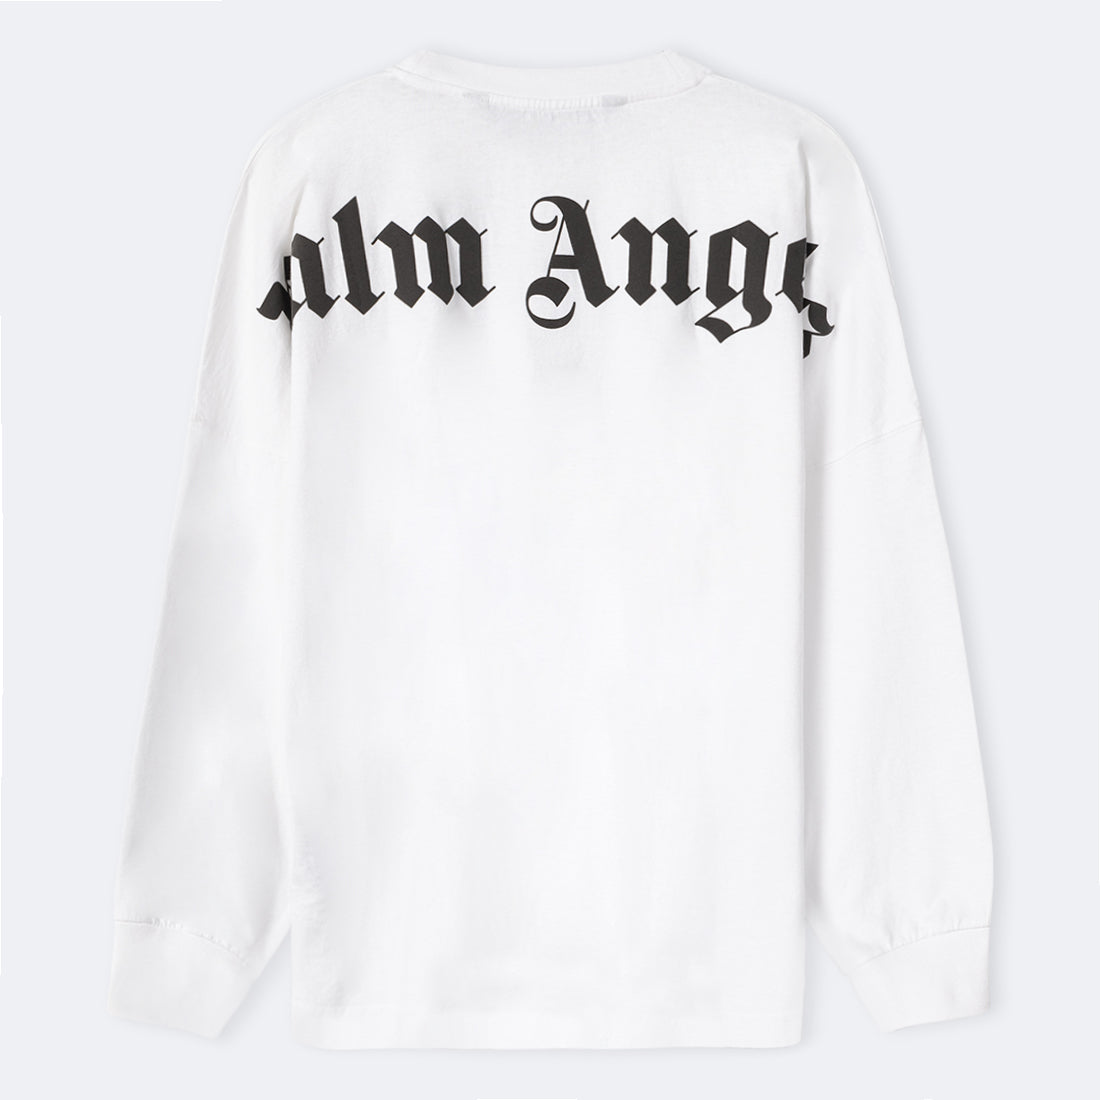 PALM ANGELS | Oversized Longsleeve T-Shirt CLASSIC LOGO